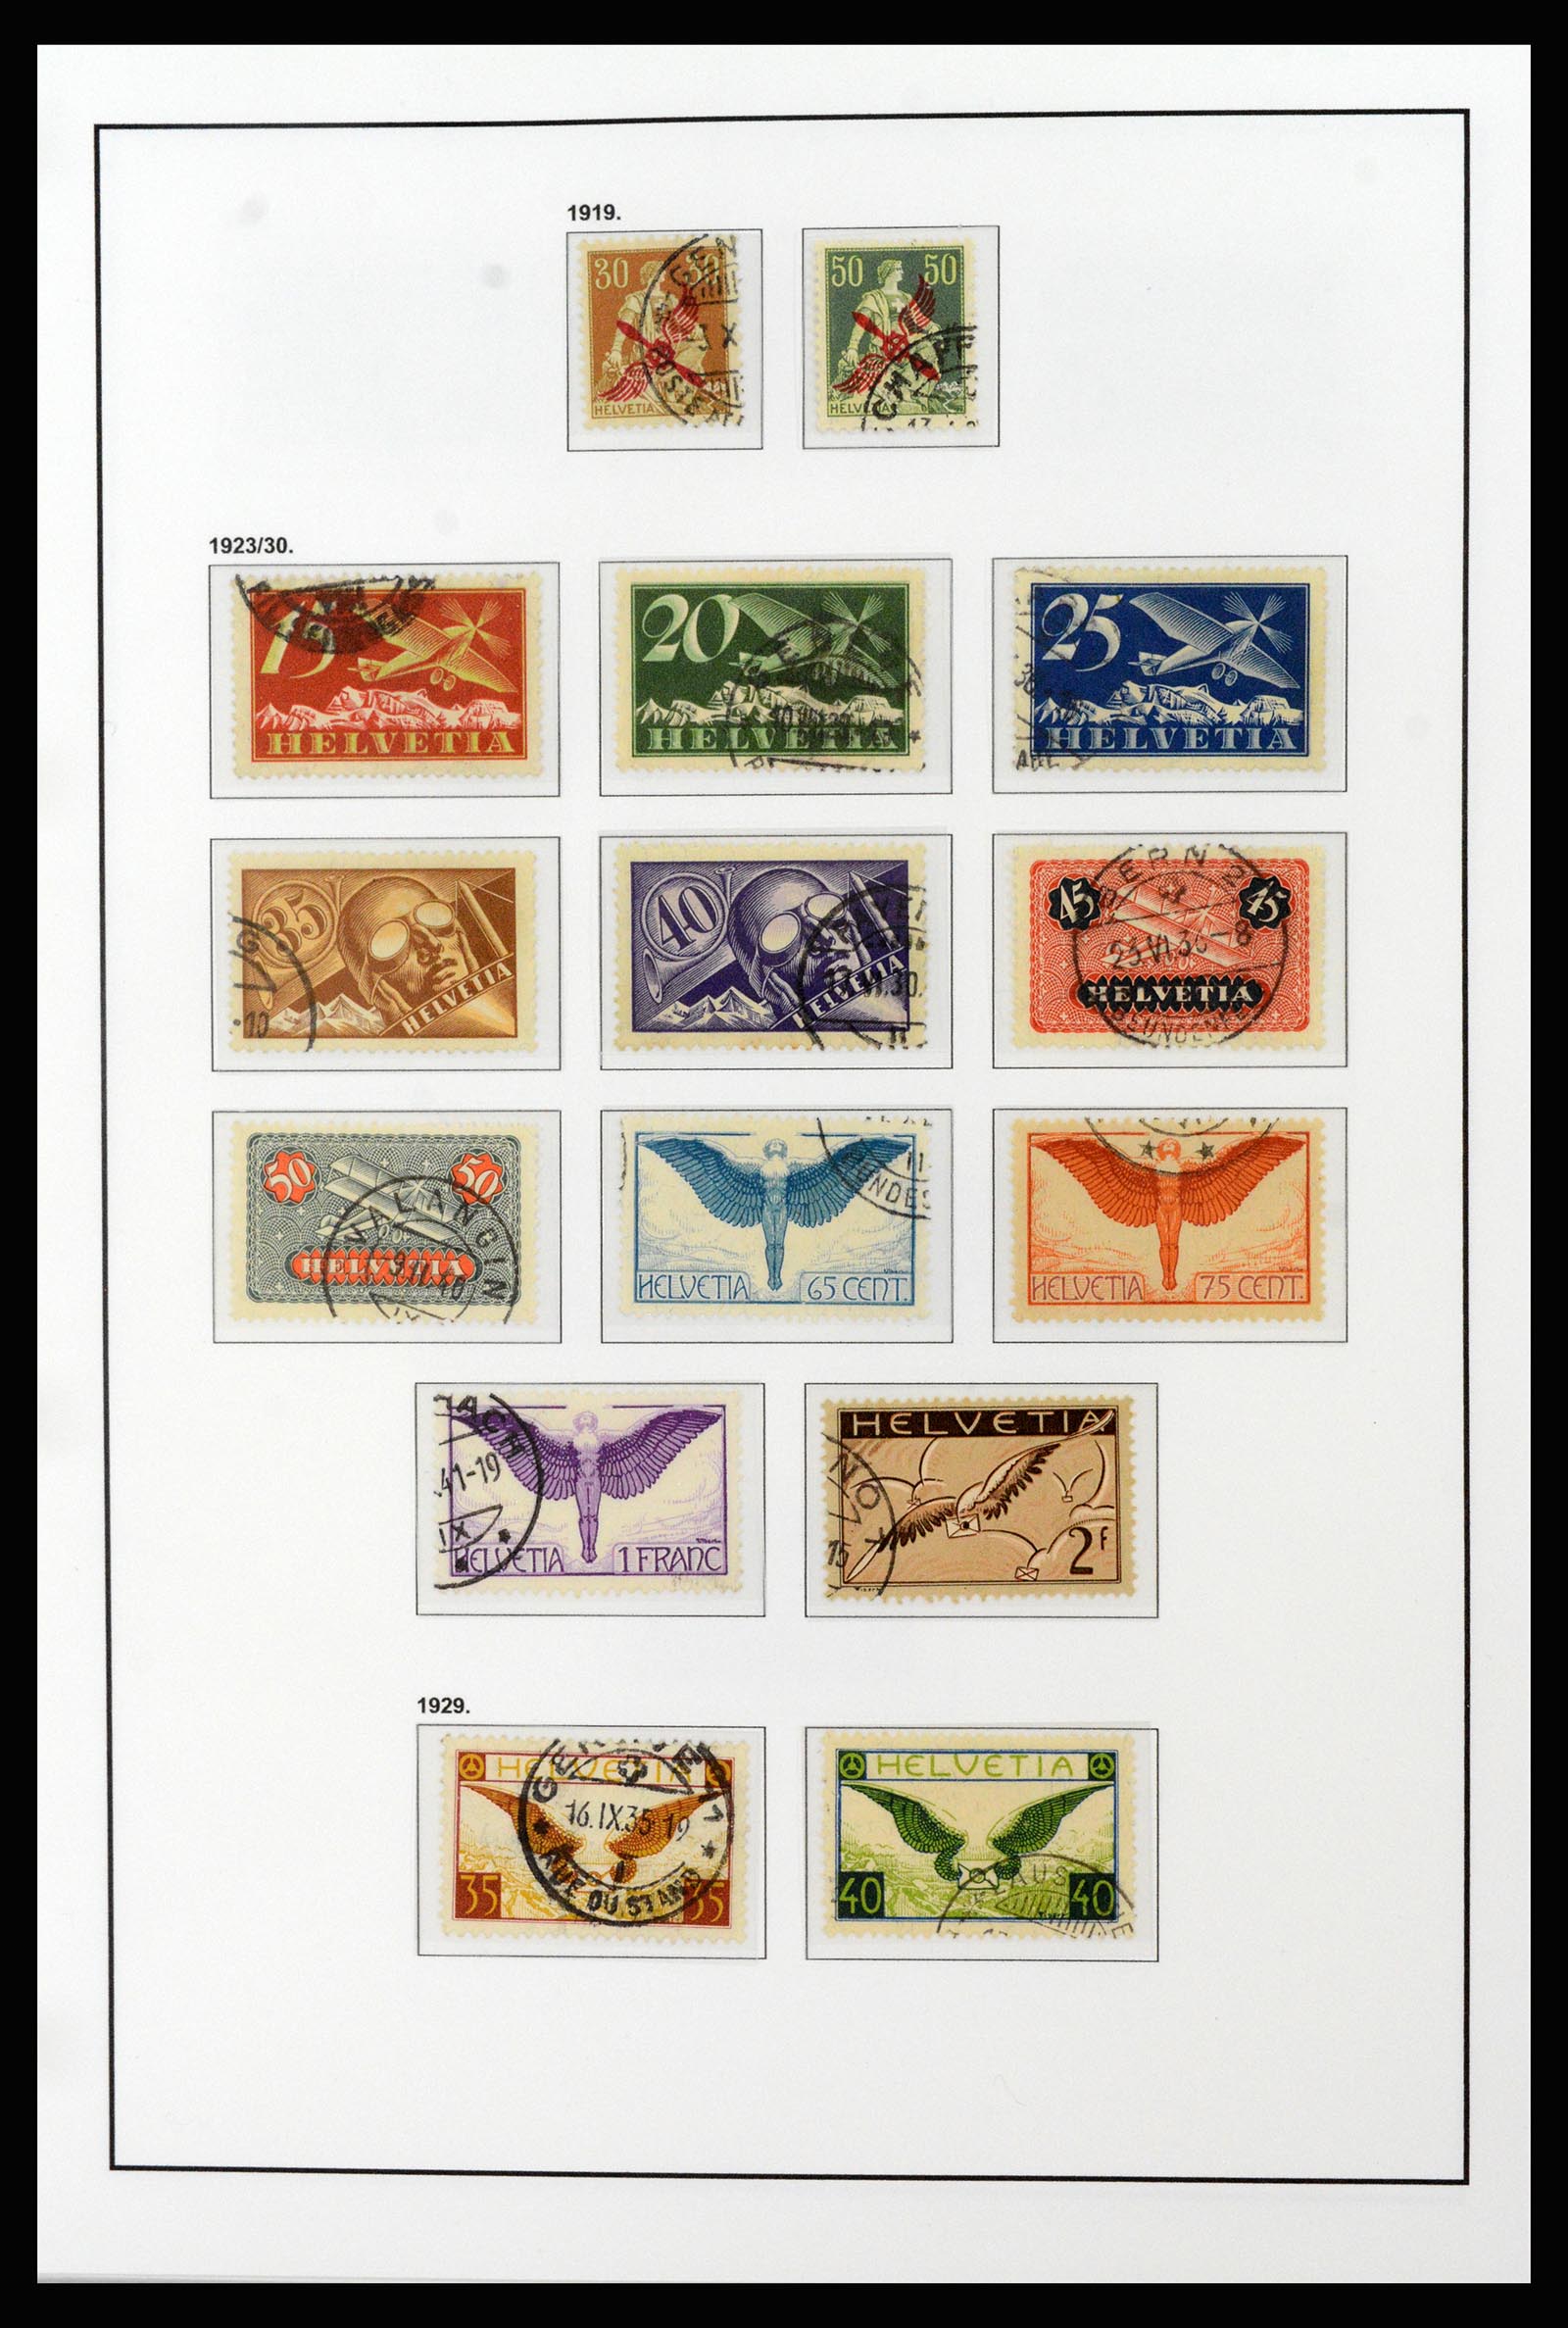 37225 095 - Stamp collection 37225 Switzerland 1854-2020.